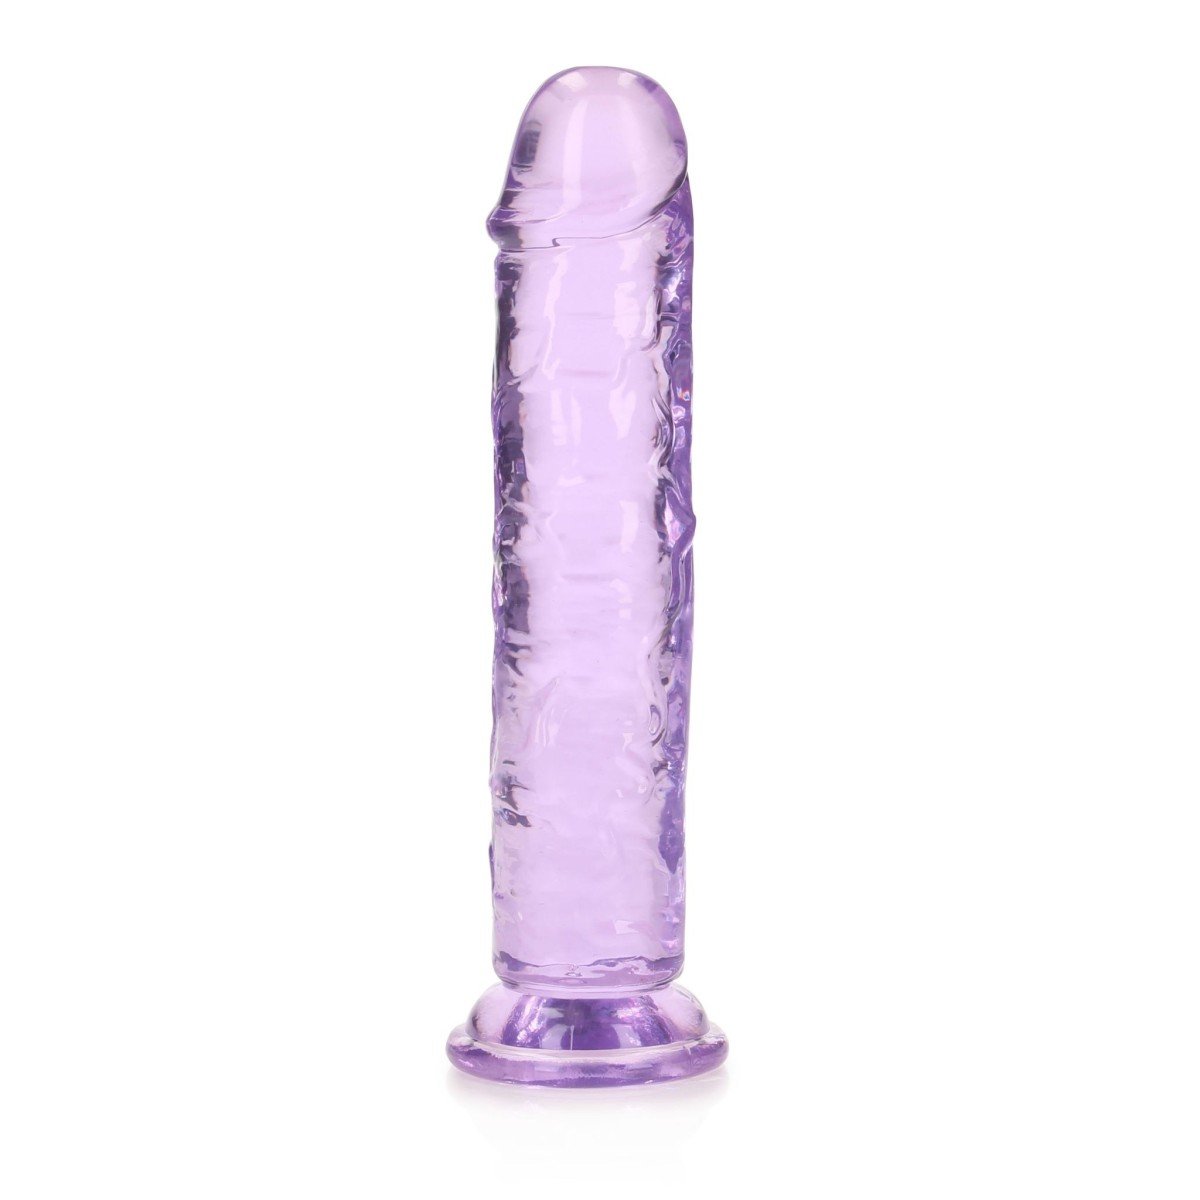 Gelové dildo RealRock Crystal Clear Realistic 7″ fialové, dildo s přísavkou 20 x 3,8 cm